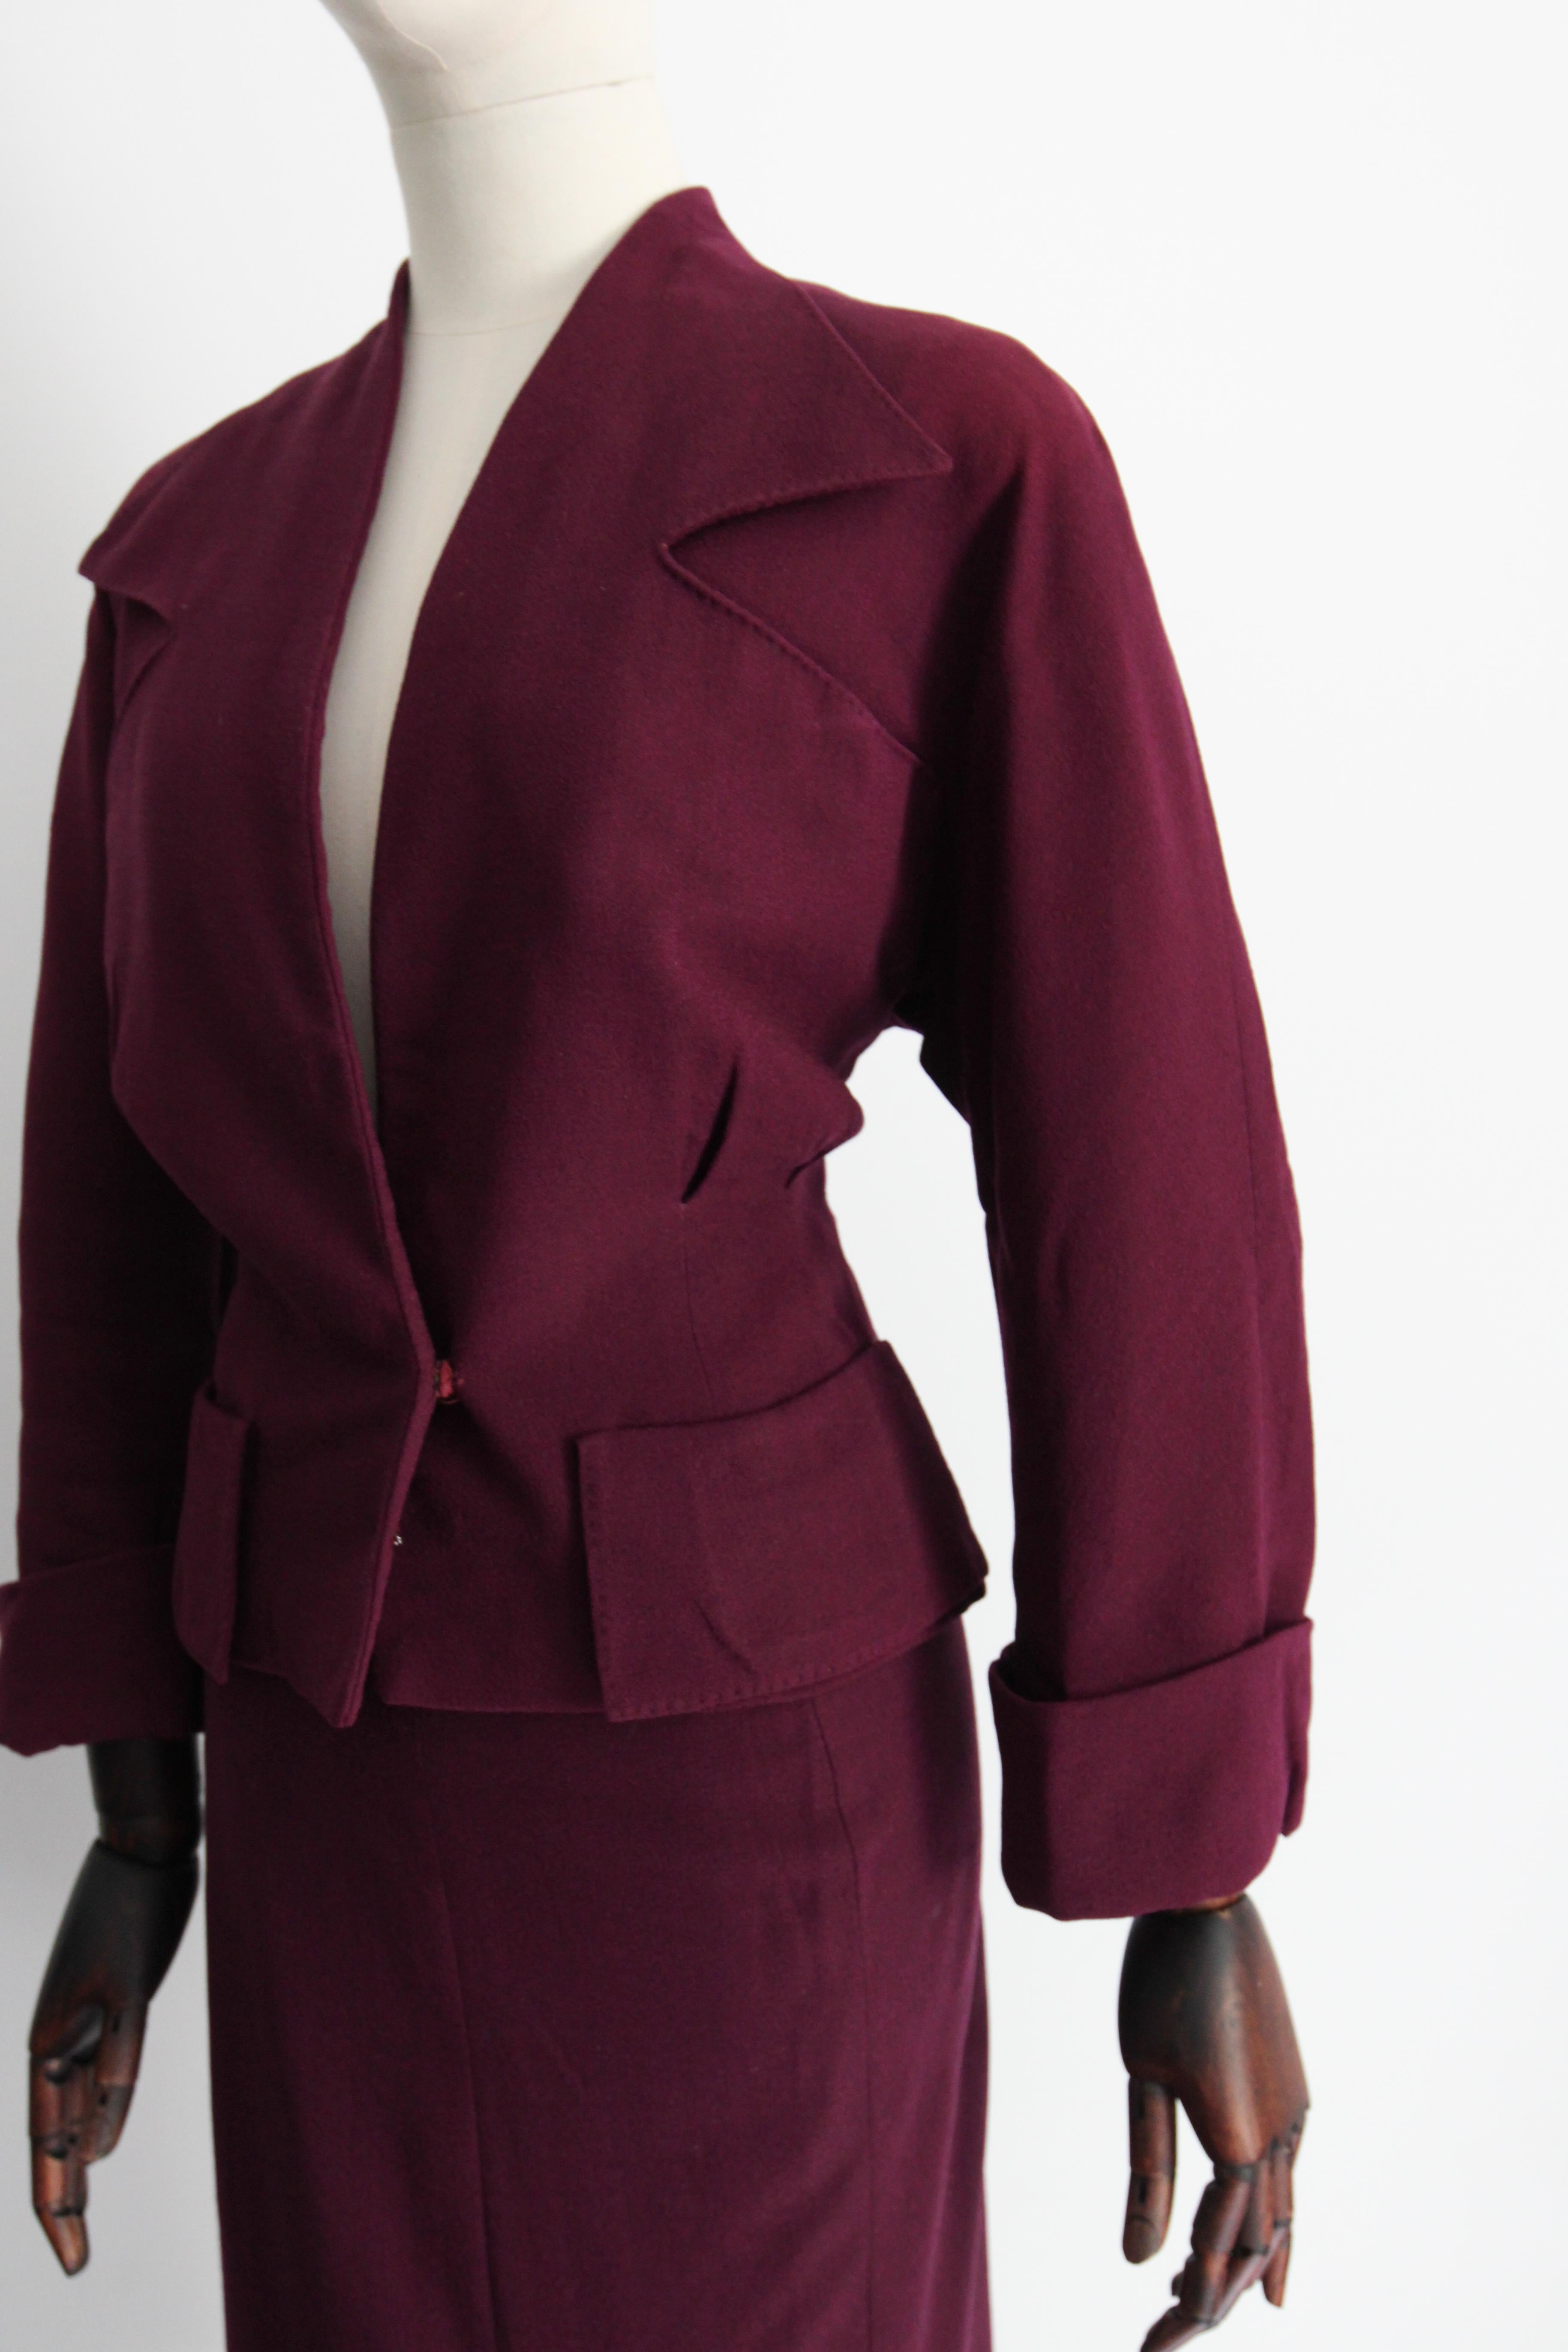 Vintage 1940's plum wool crepe skirt suit tailored burgundy suit UK 8-10 US 4-6 For Sale 3